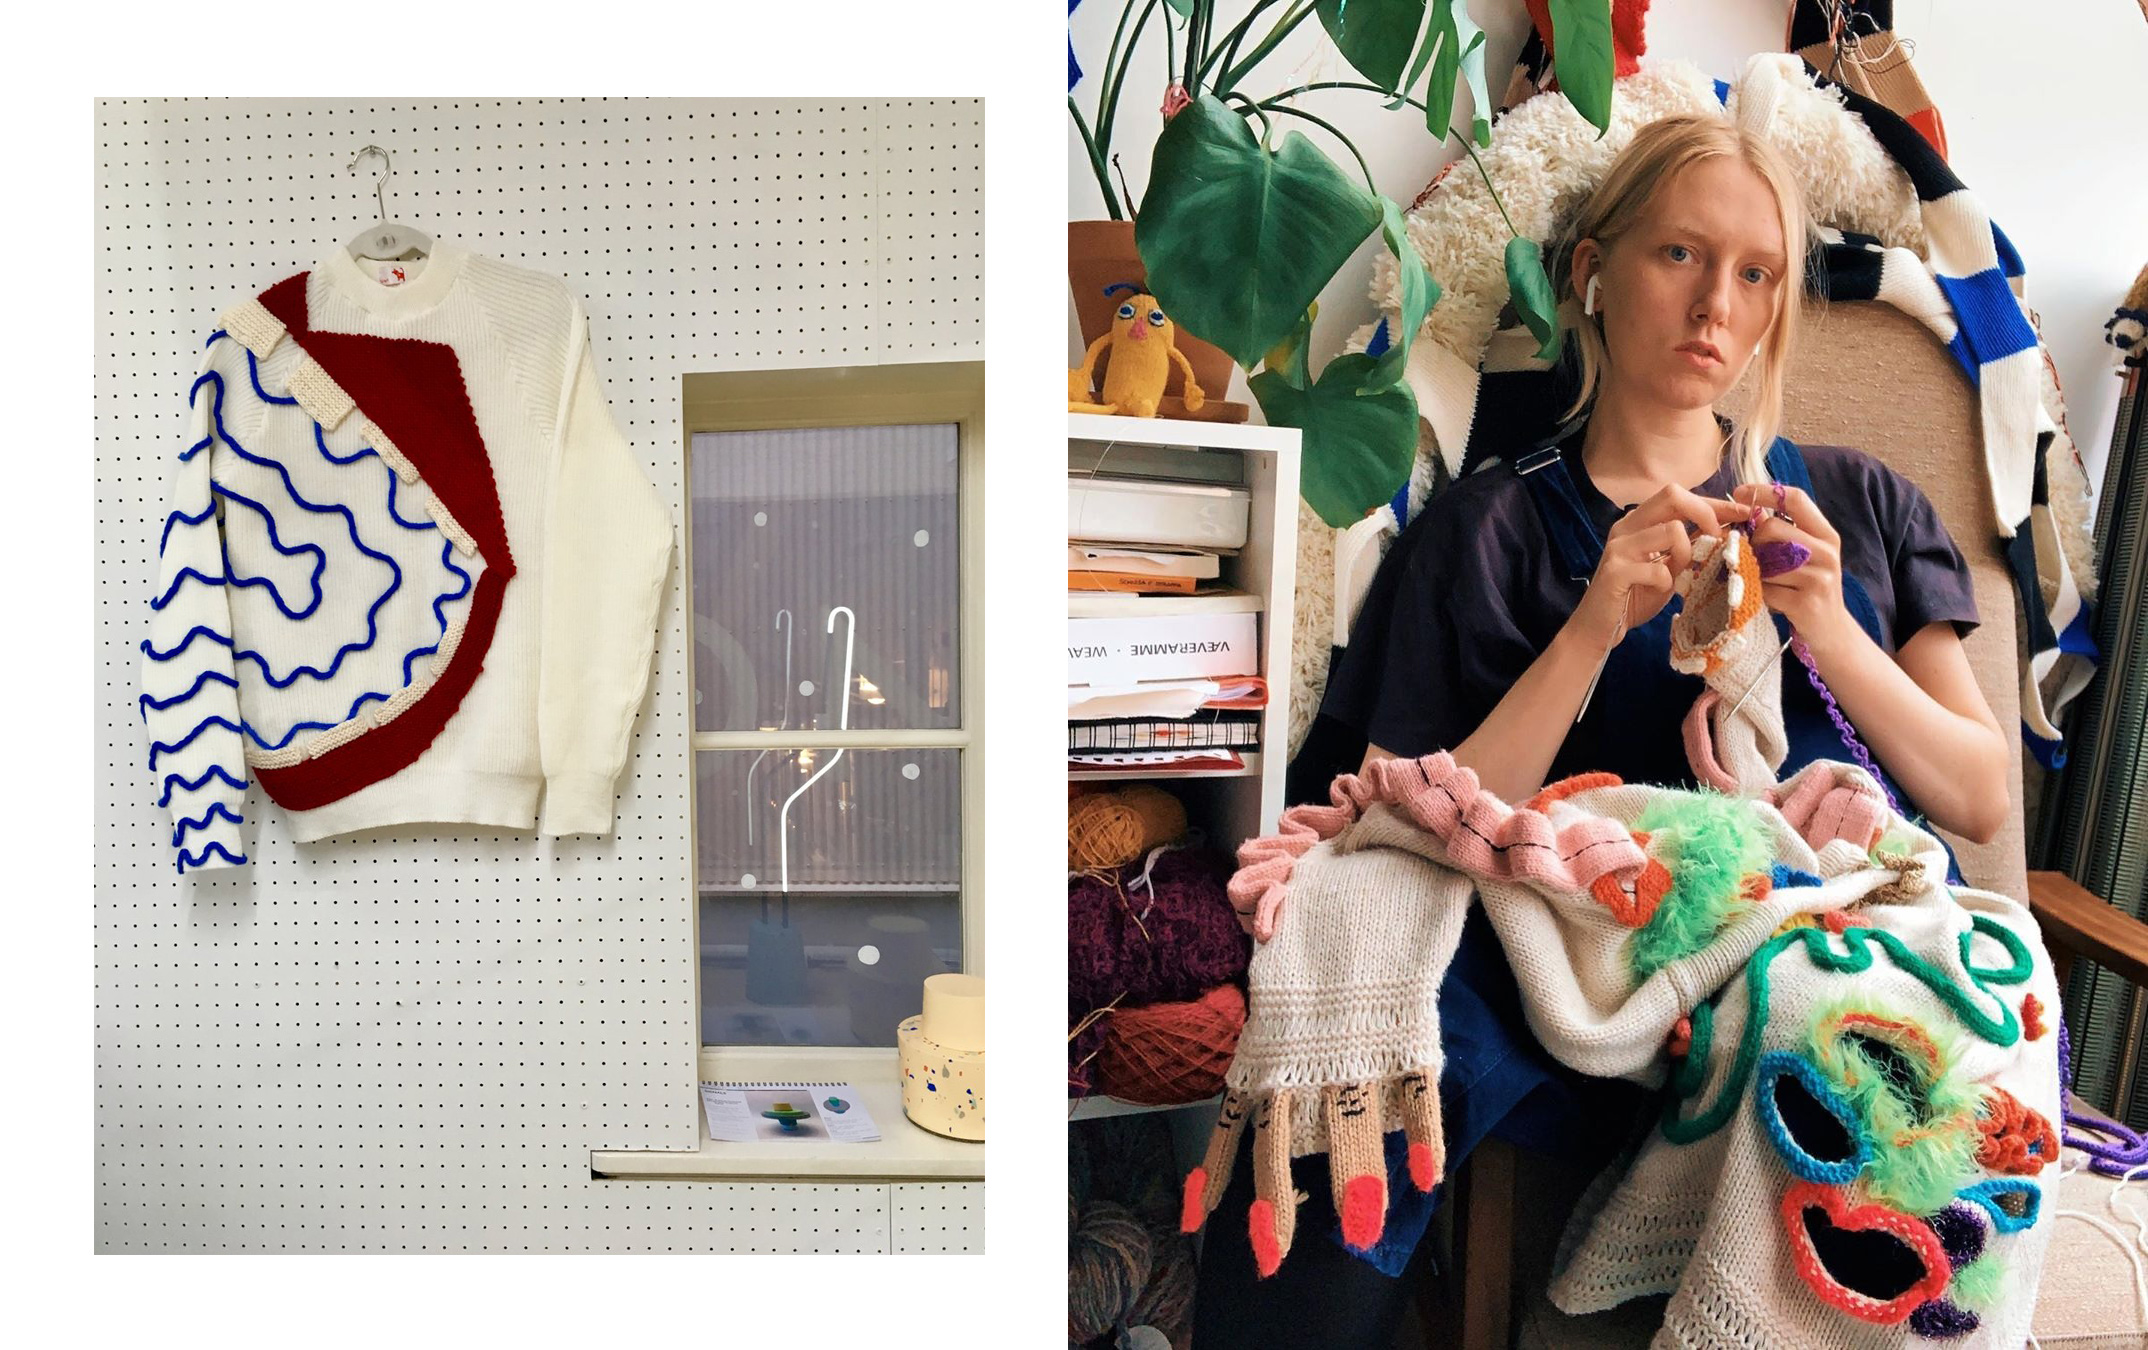 Knitted vulvas hairy legs and reworked clothing Meet feminist textile artist Ýrúrarí Pop